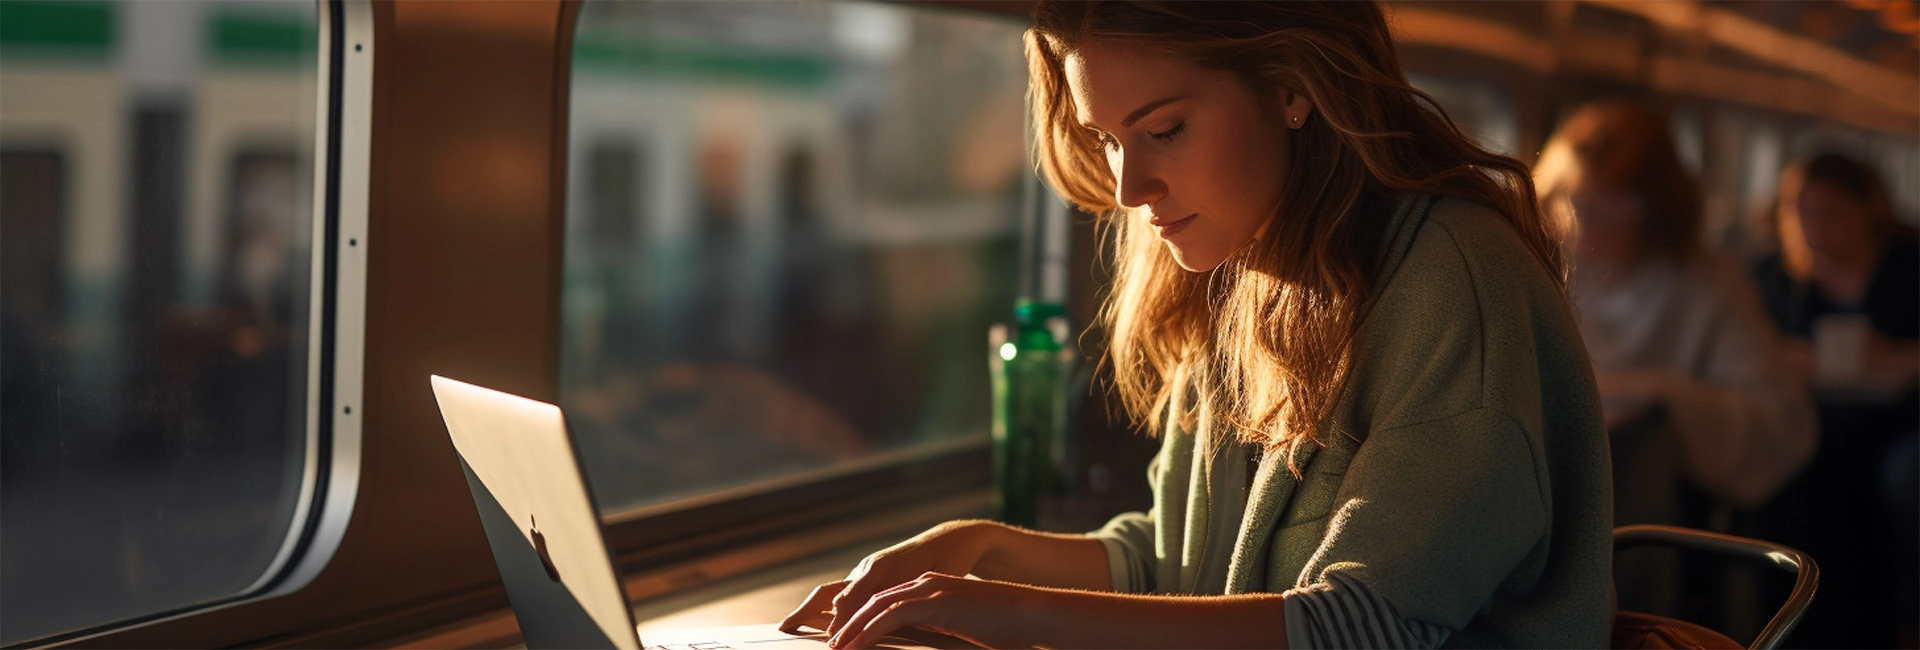 Woman using laptop by window of train